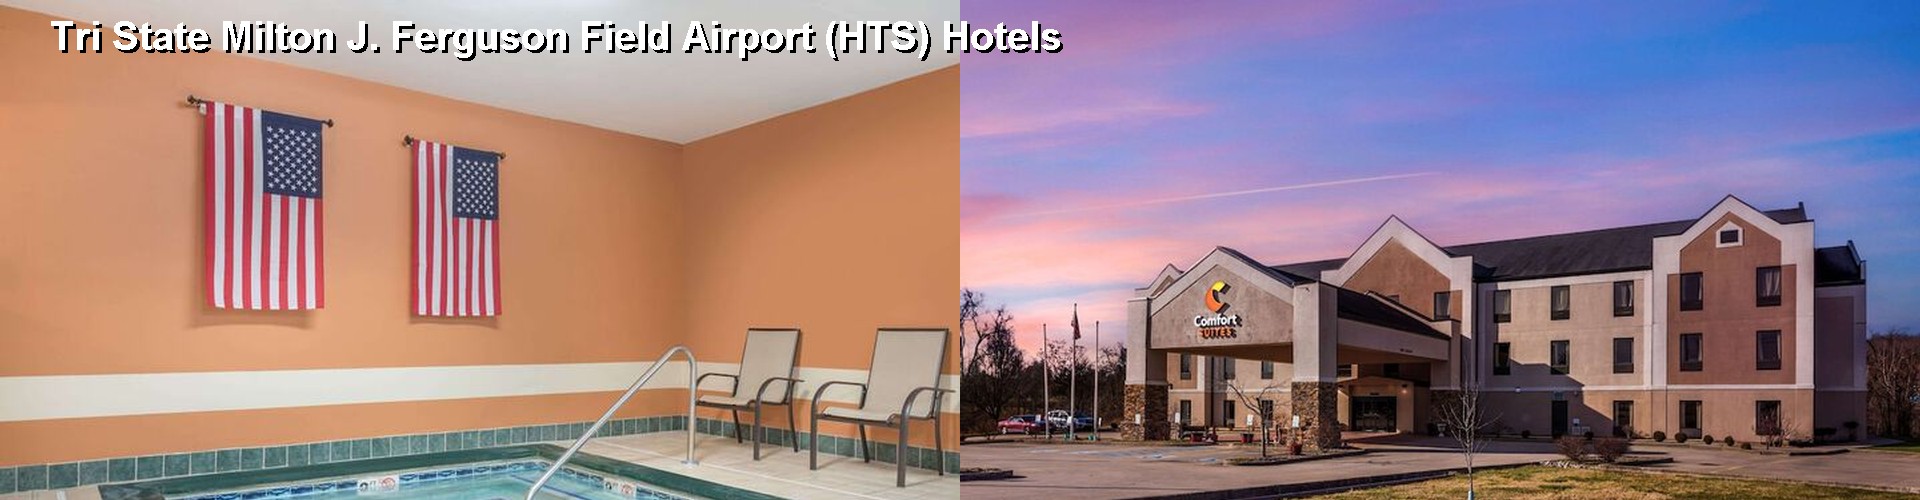 5 Best Hotels near Tri State Milton J. Ferguson Field Airport (HTS)